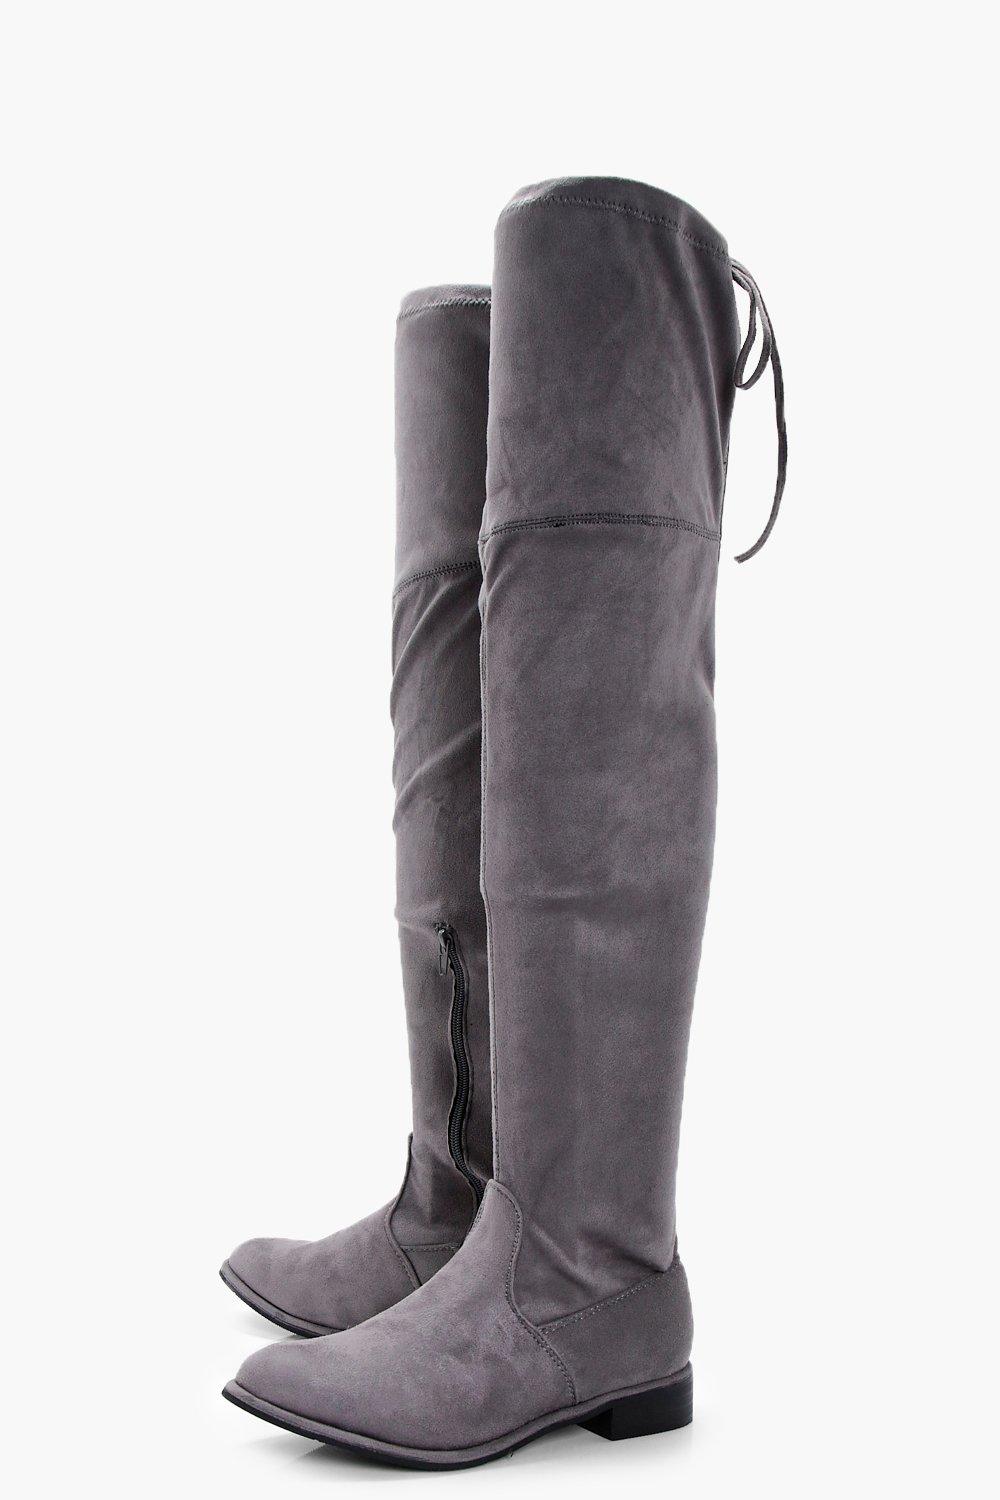 grey flat knee high boots